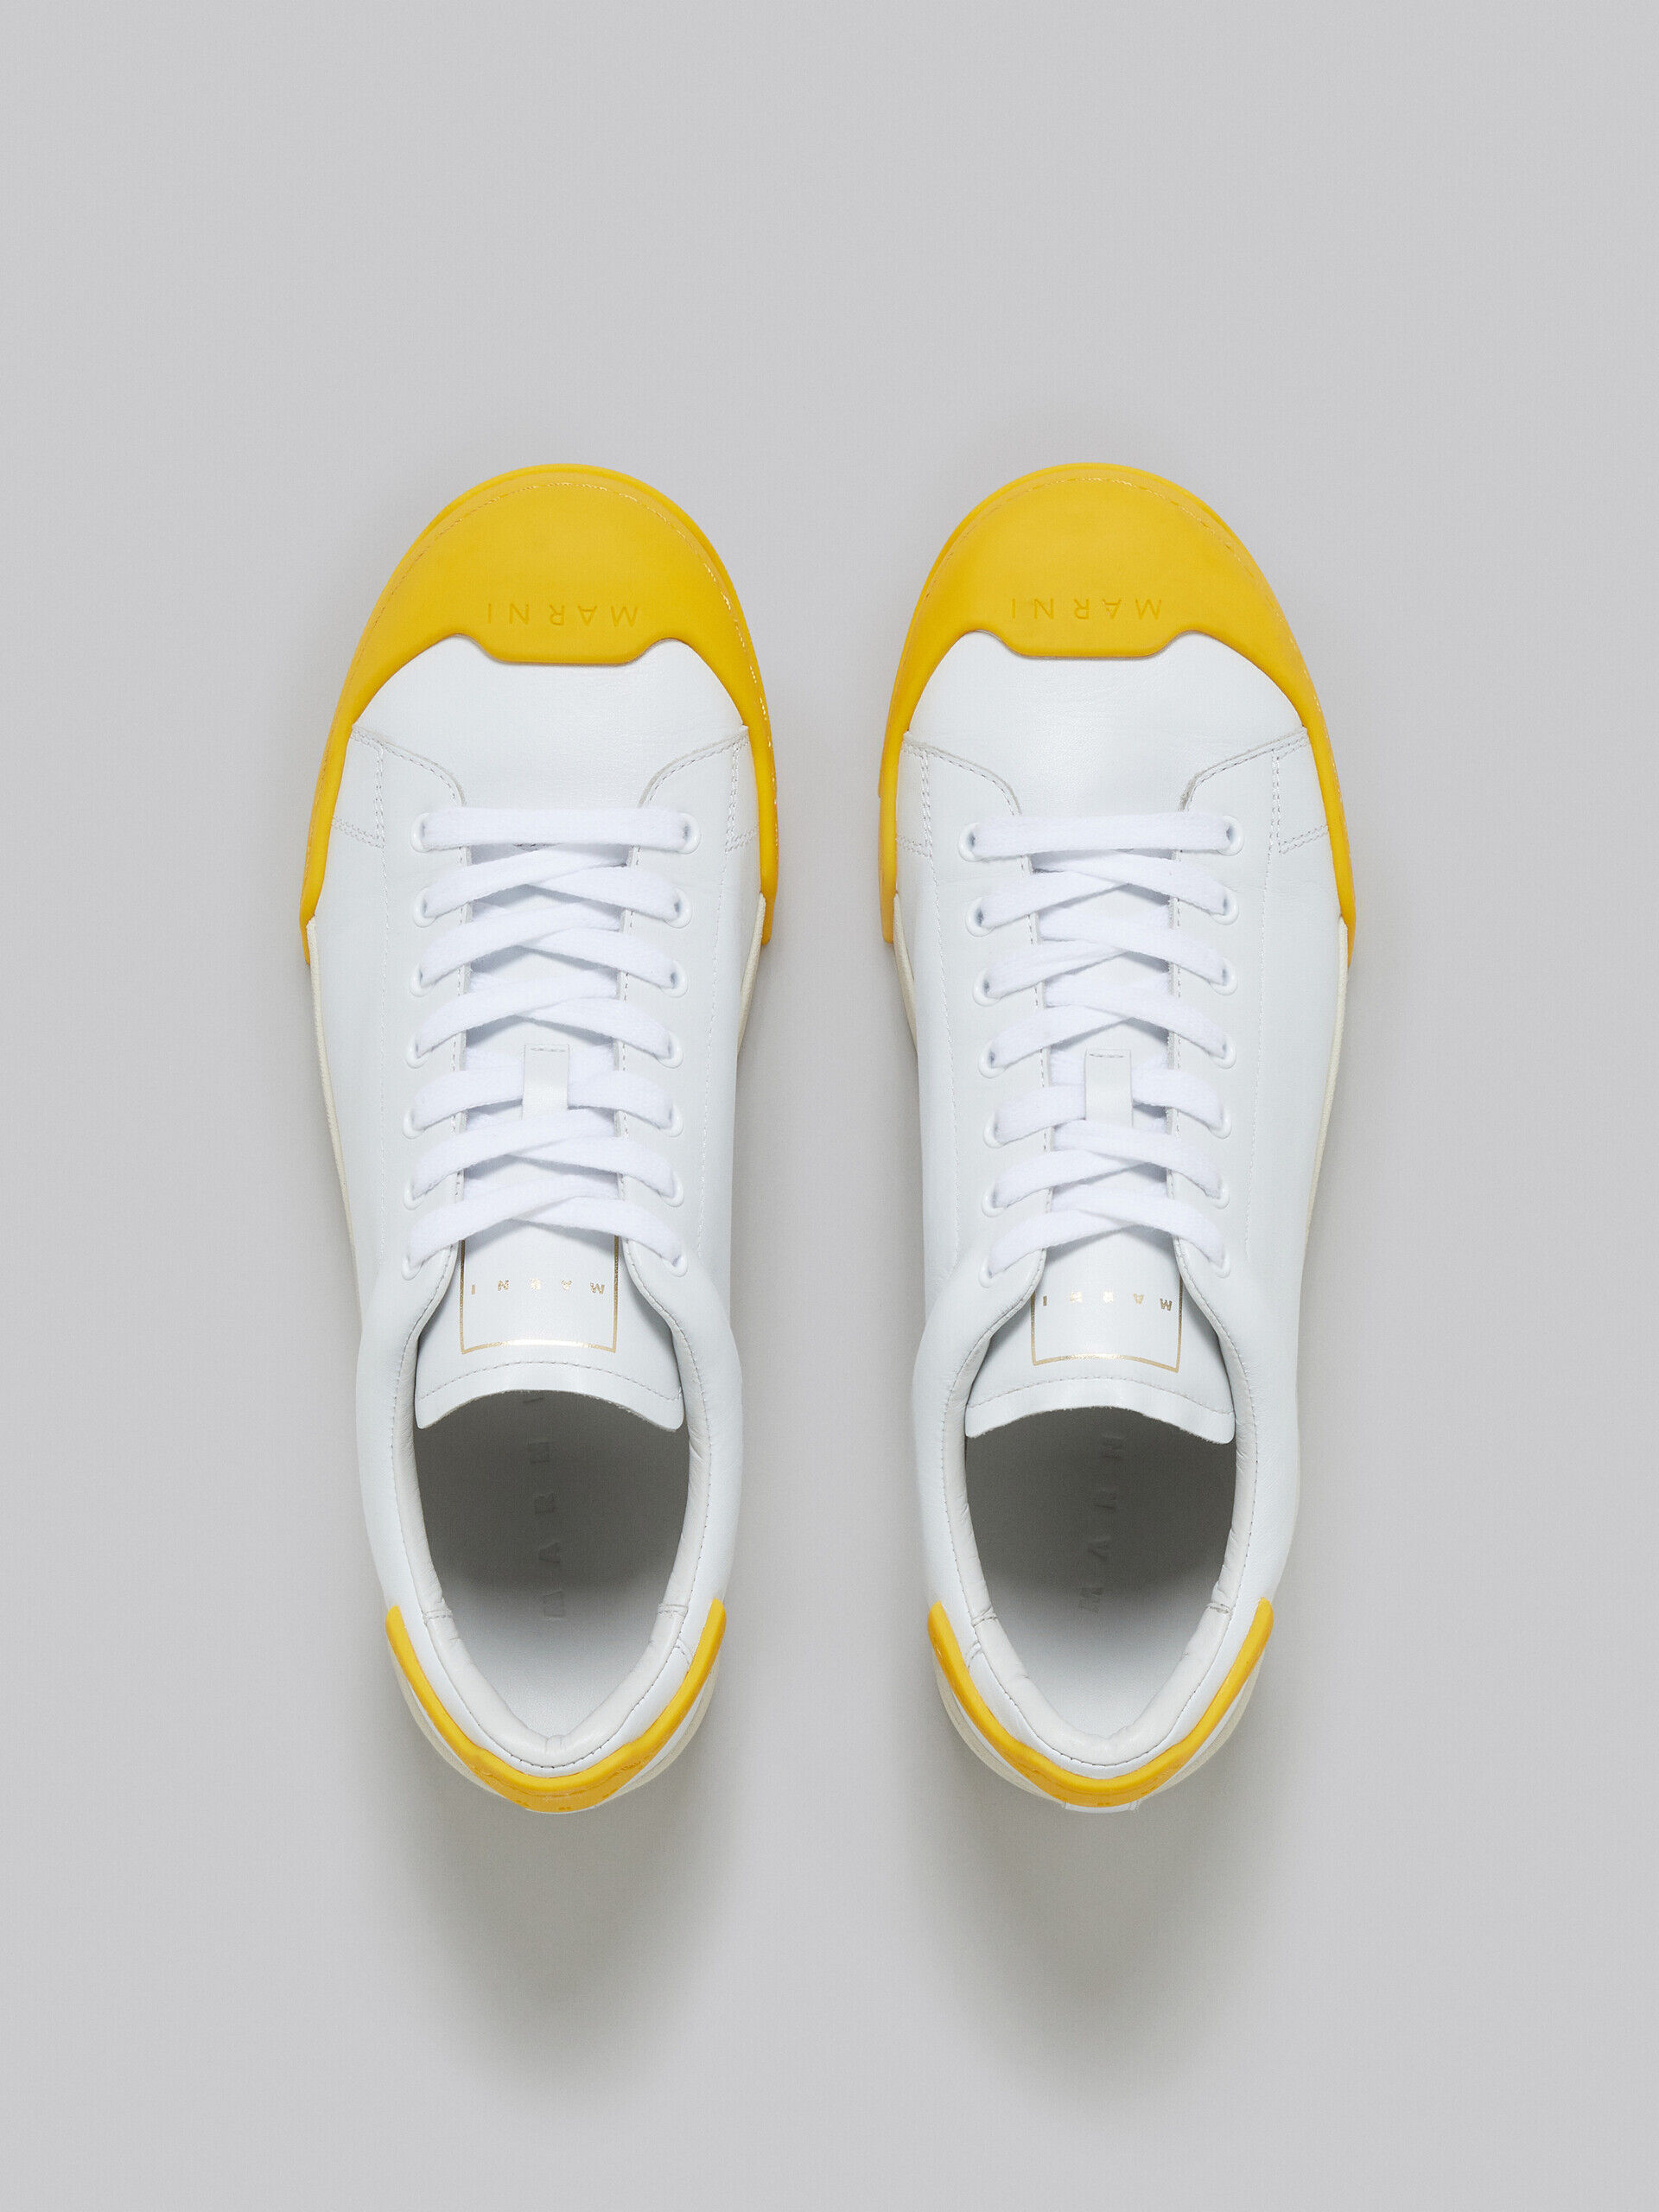 Dada Bumper sneaker in white and yellow leather | Marni